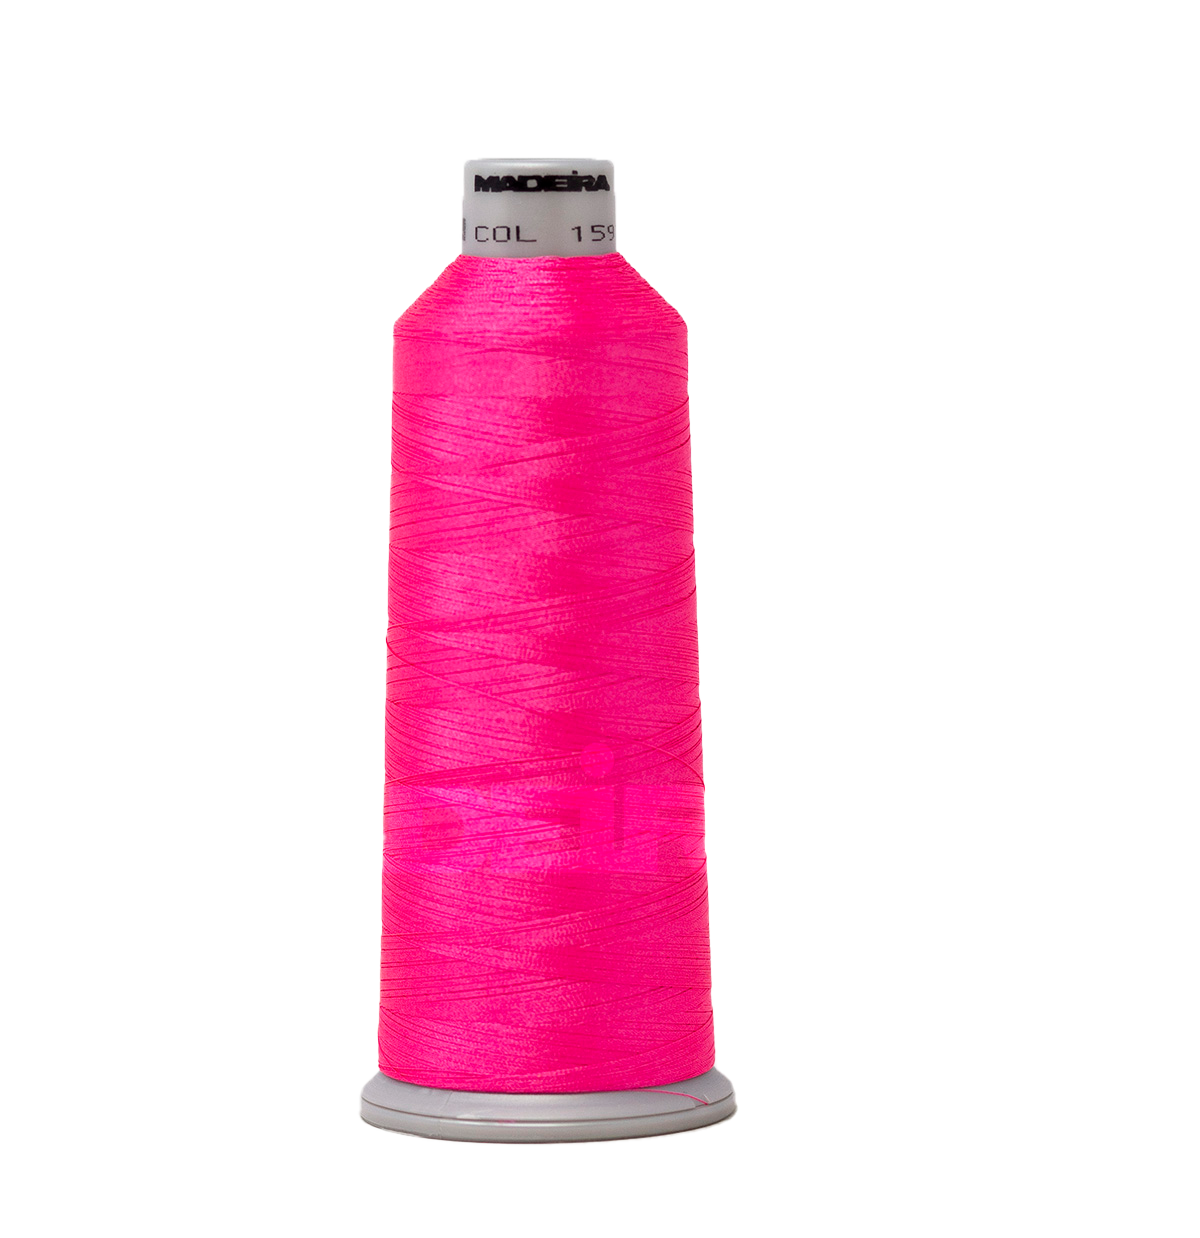 Fluorescent Pink 1597 #40 Weight Madeira Polyneon Thread